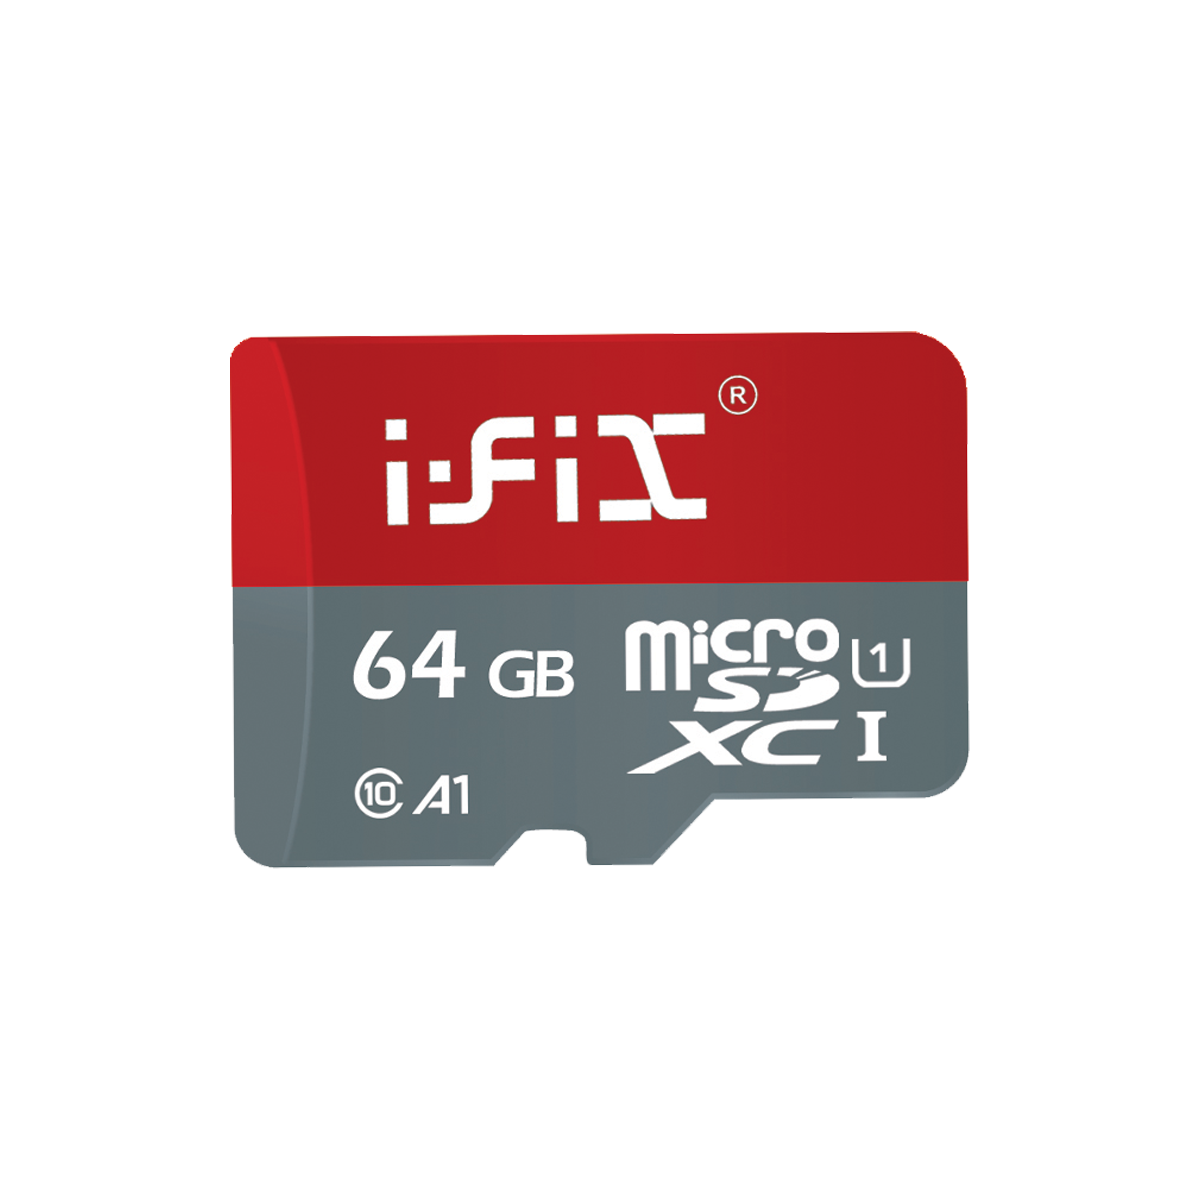 iFiX 64GB Memory card